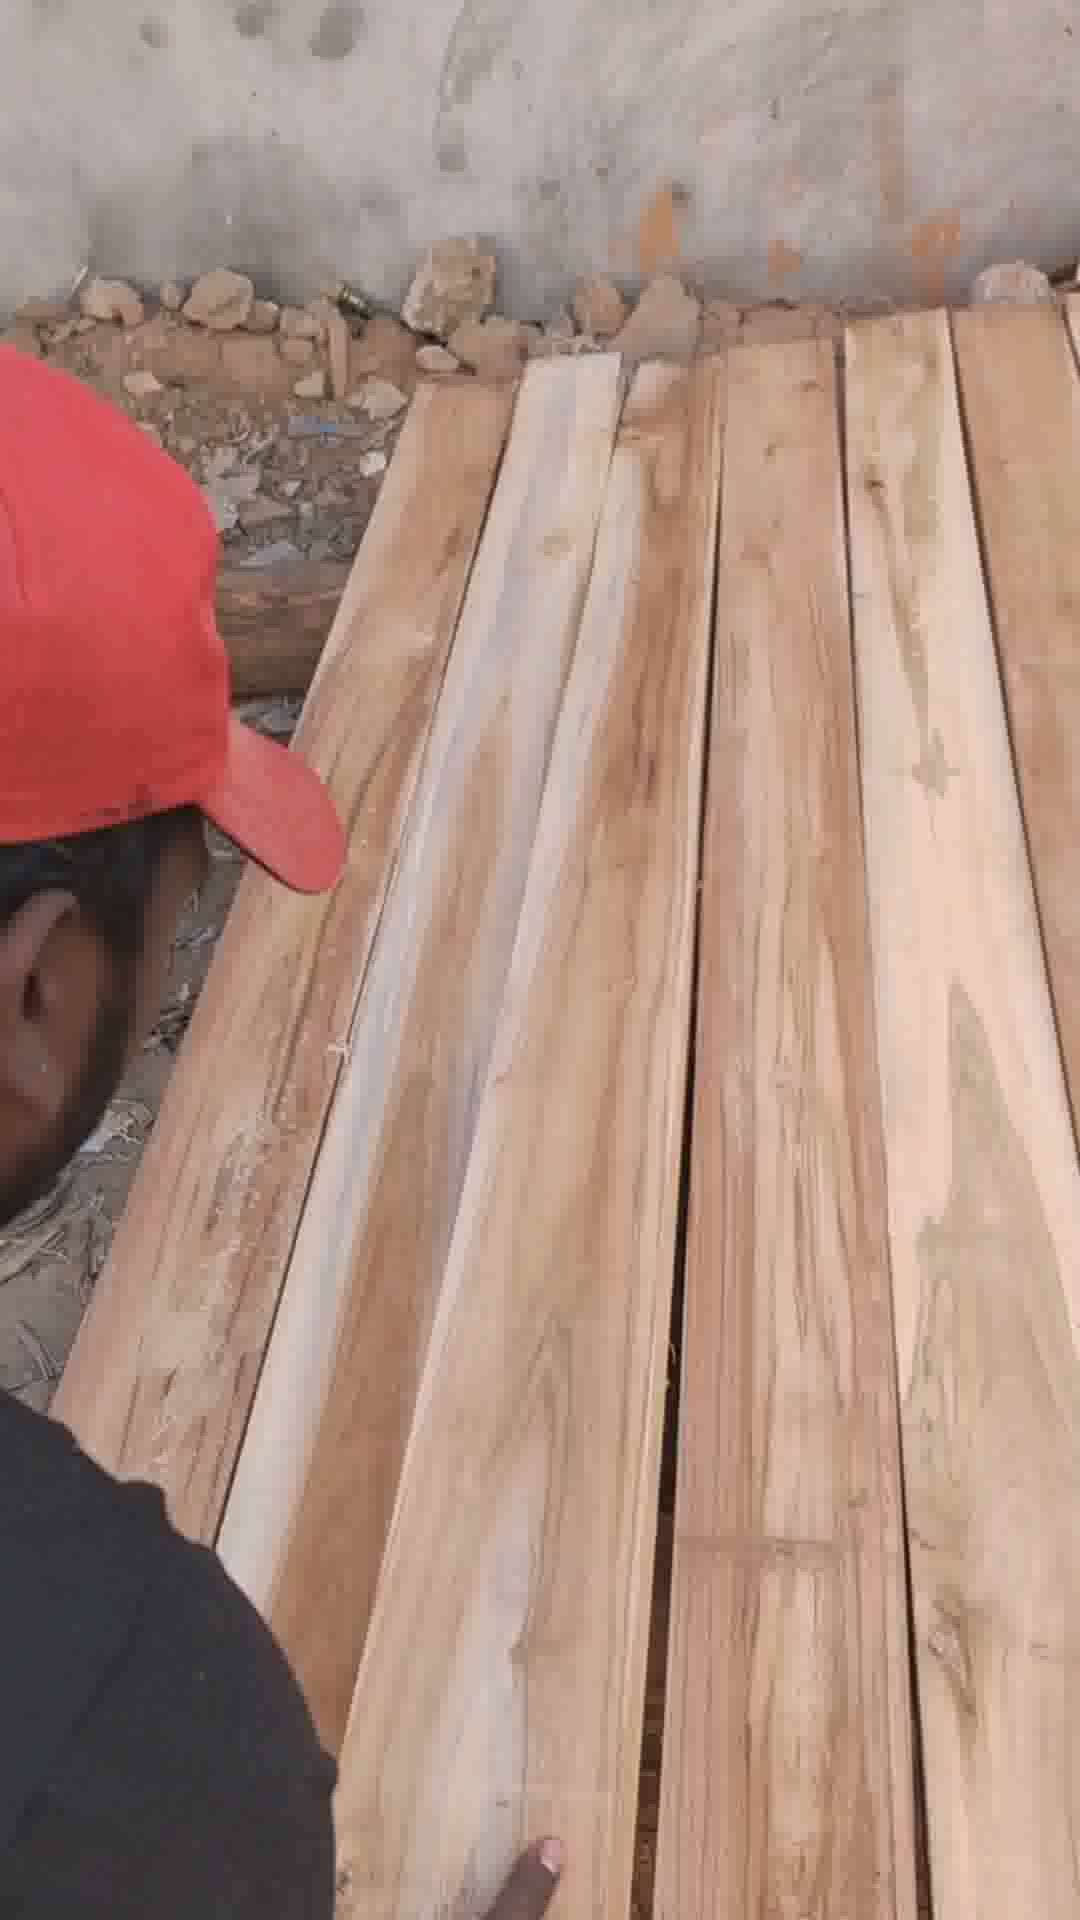 Know more 👉 7065161065 Vipin Thakur

#shribhikshutimbers #timber #wood #plantationteakwood #naturalteak #teak #frames #material #contractors #chaukhat #ivorycoast #timberframe #timber #construction #lumber #doors #carpainter #builder #architect #interior #interiordesigner